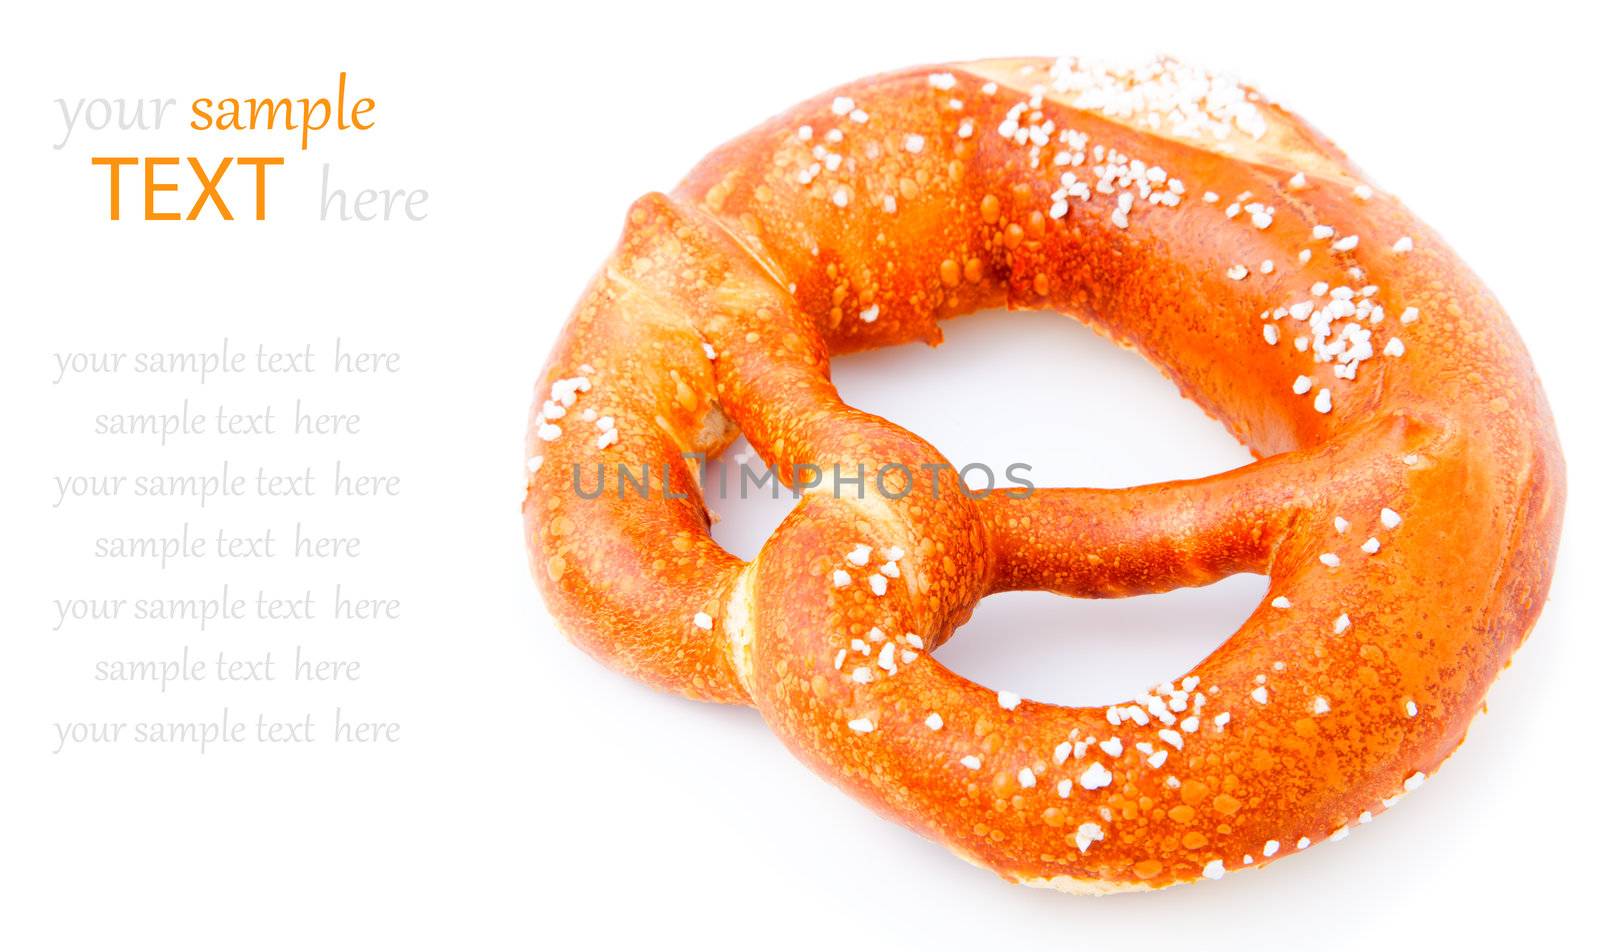 fresh German pretzel (Bretzel) with salt, with copy space. by motorolka